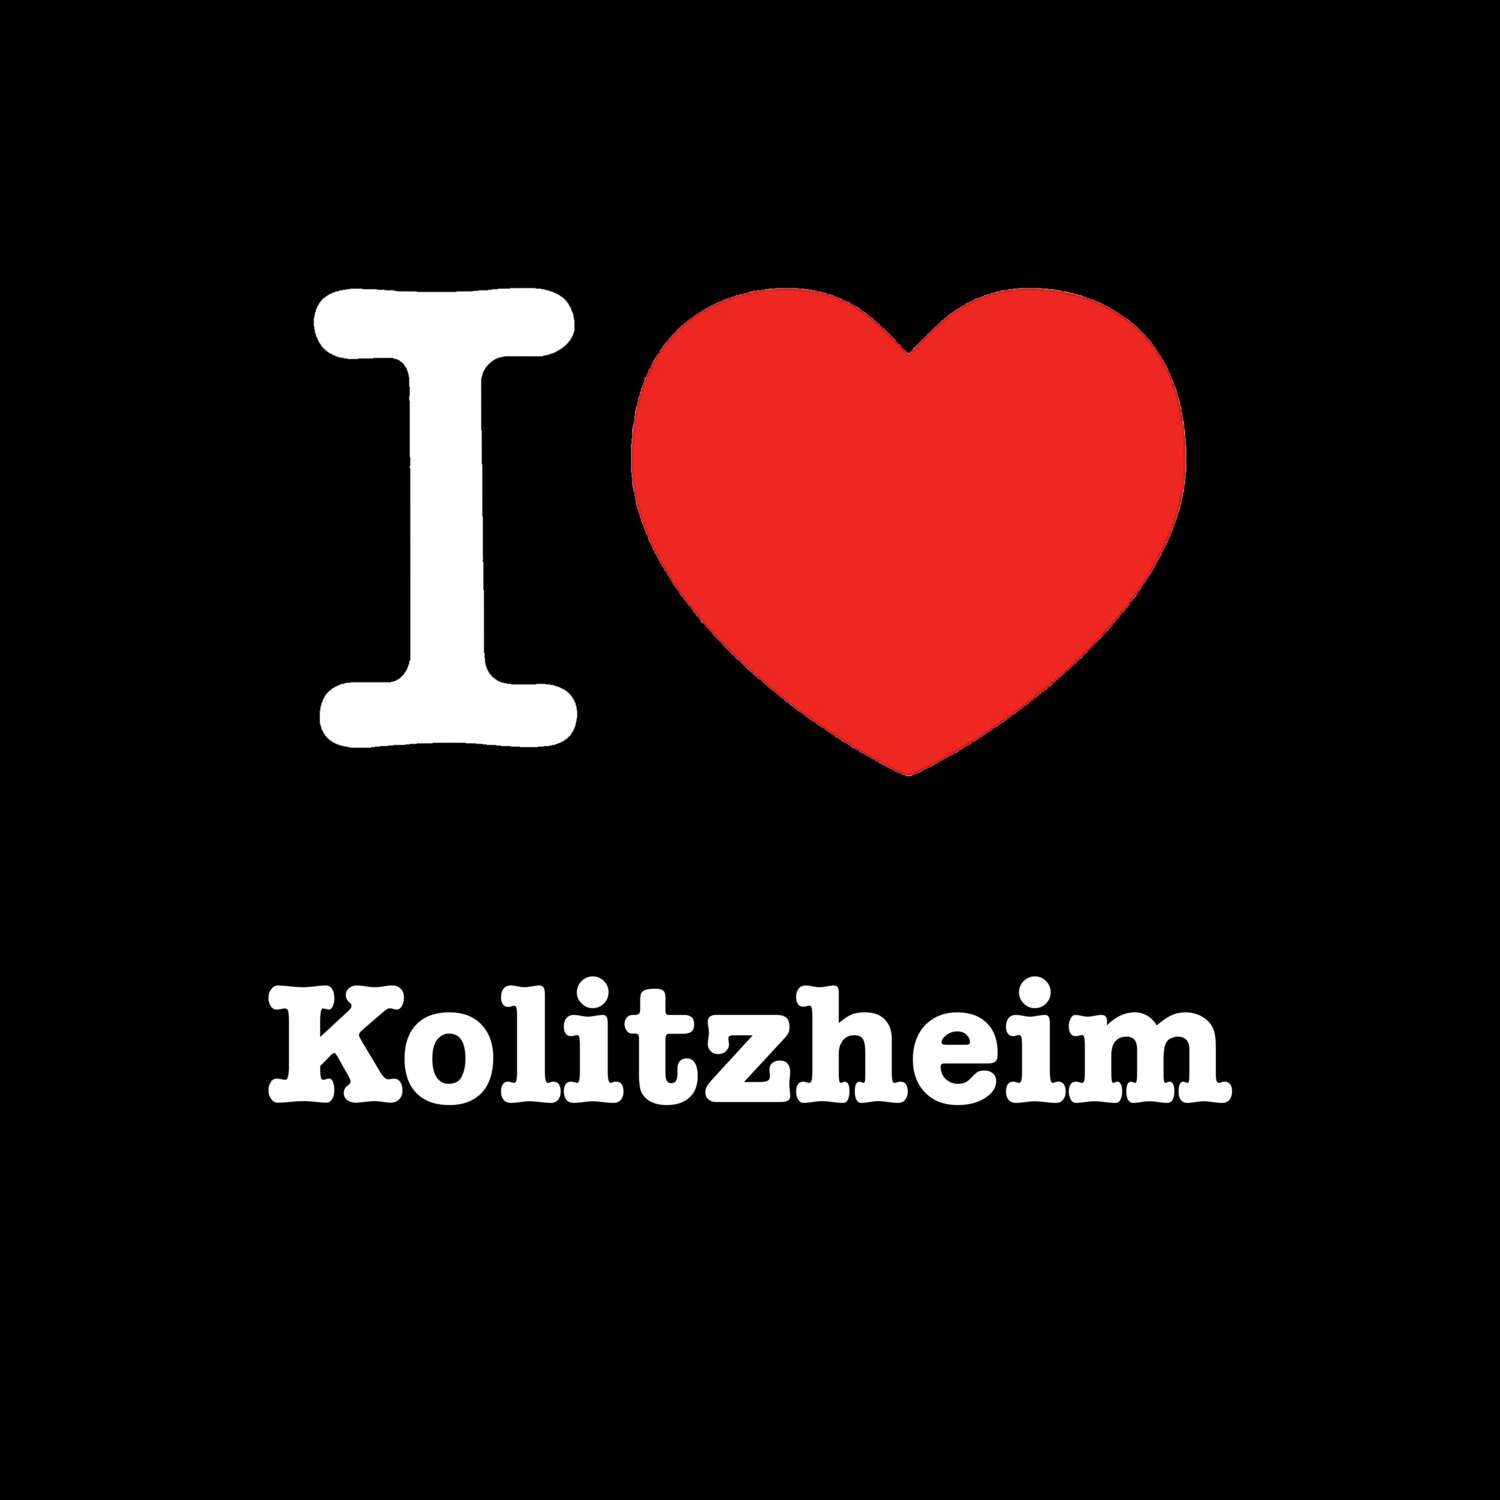 Kolitzheim T-Shirt »I love«